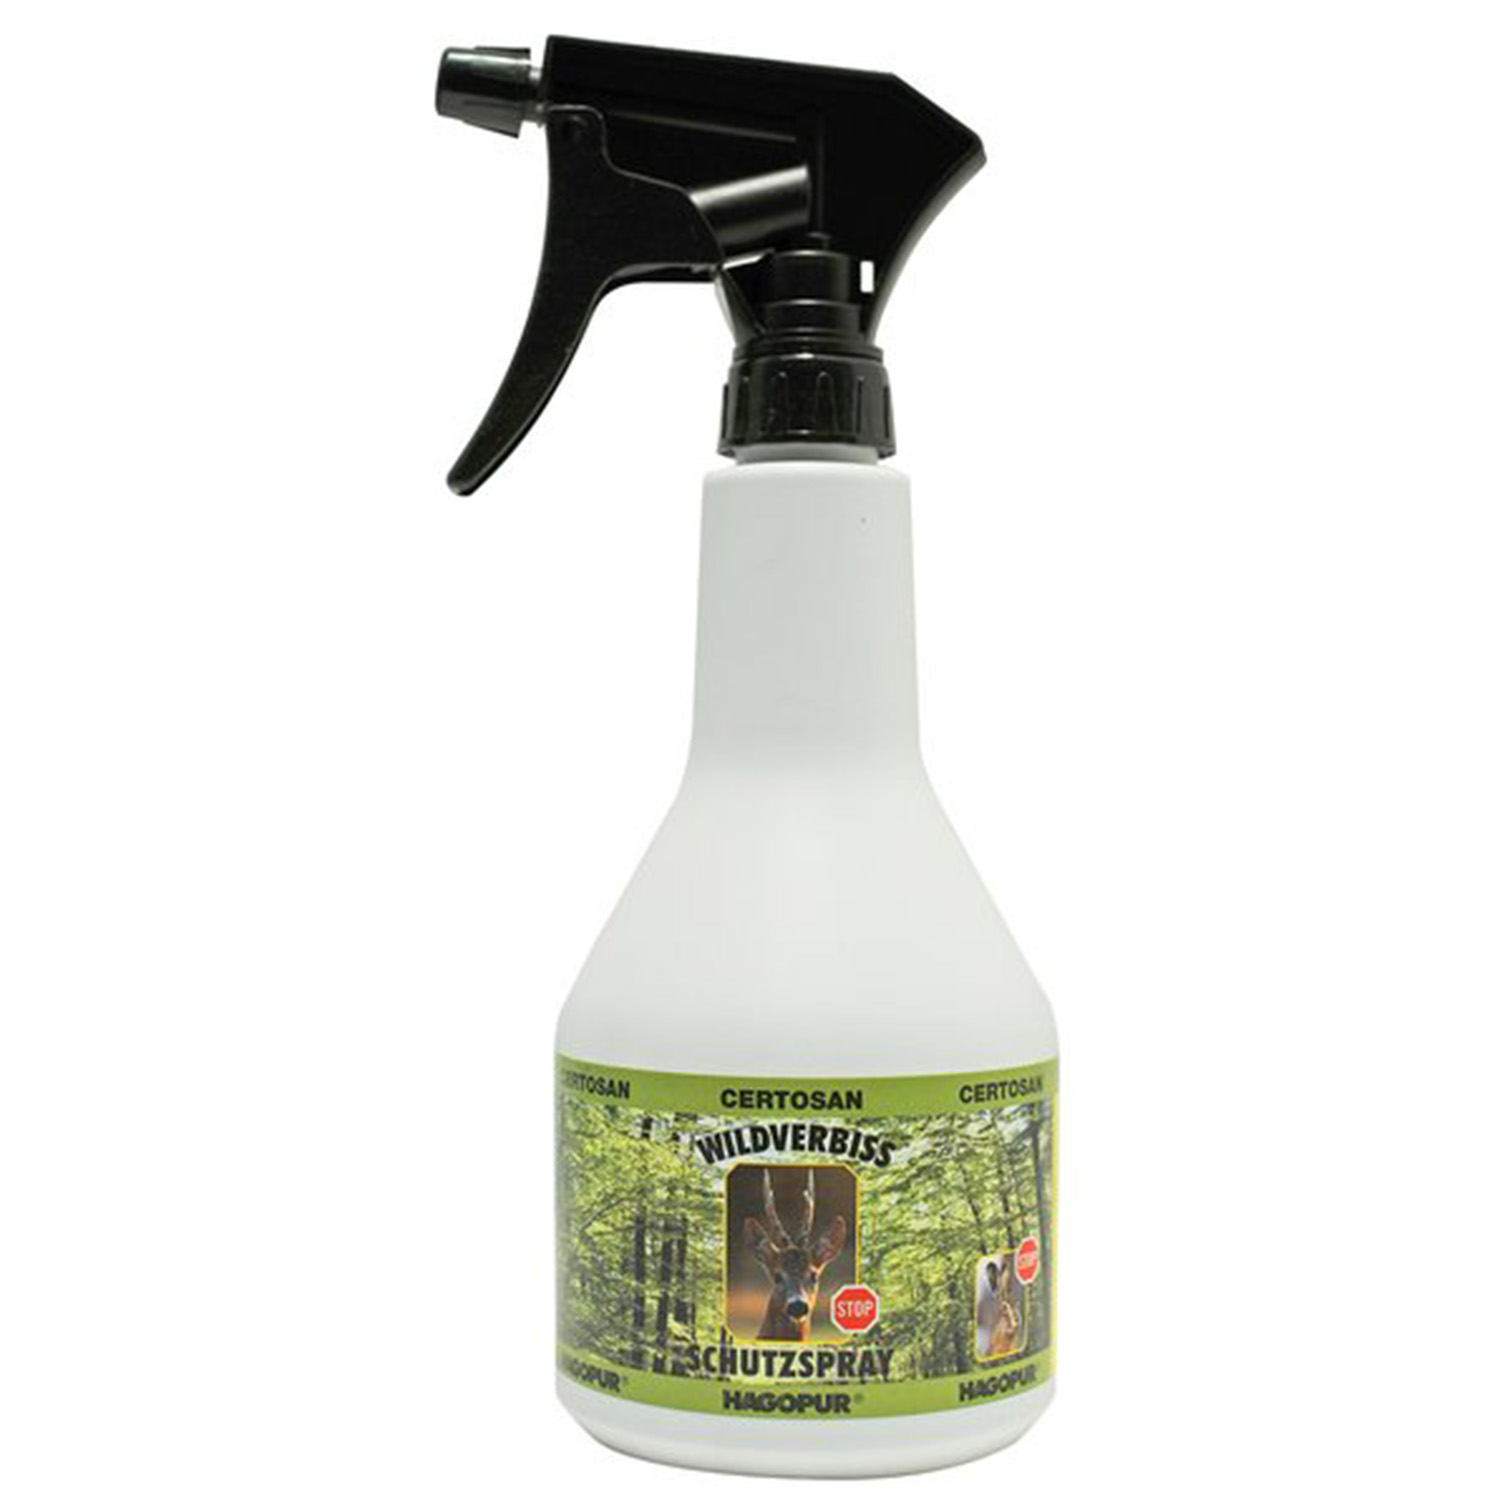  Hagopur Pump spray bottle Certosan